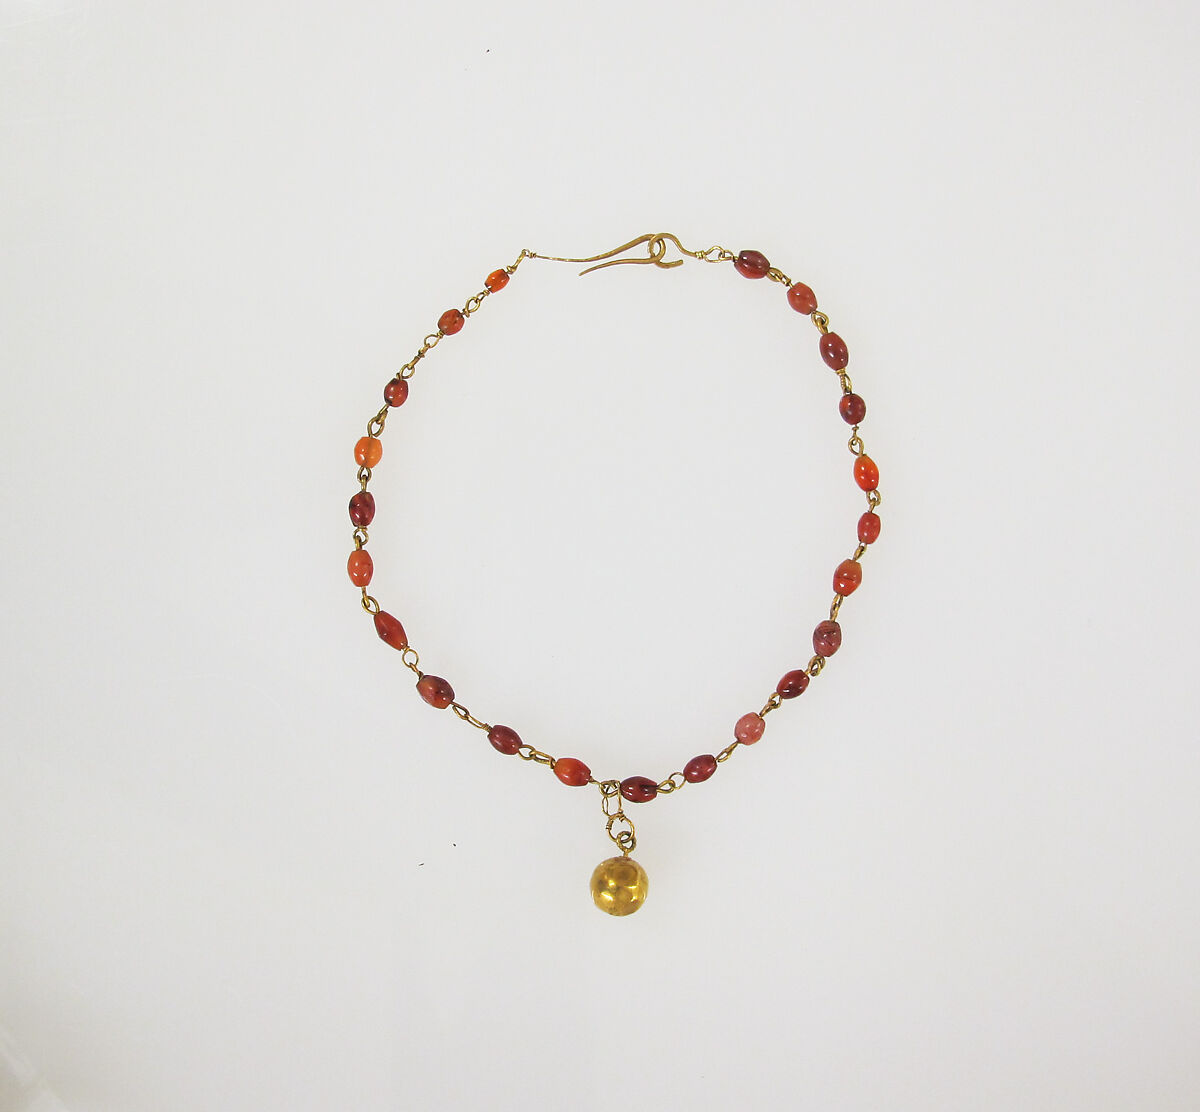 Necklace with carnelian beads, Gold, Carnelian, Roman 